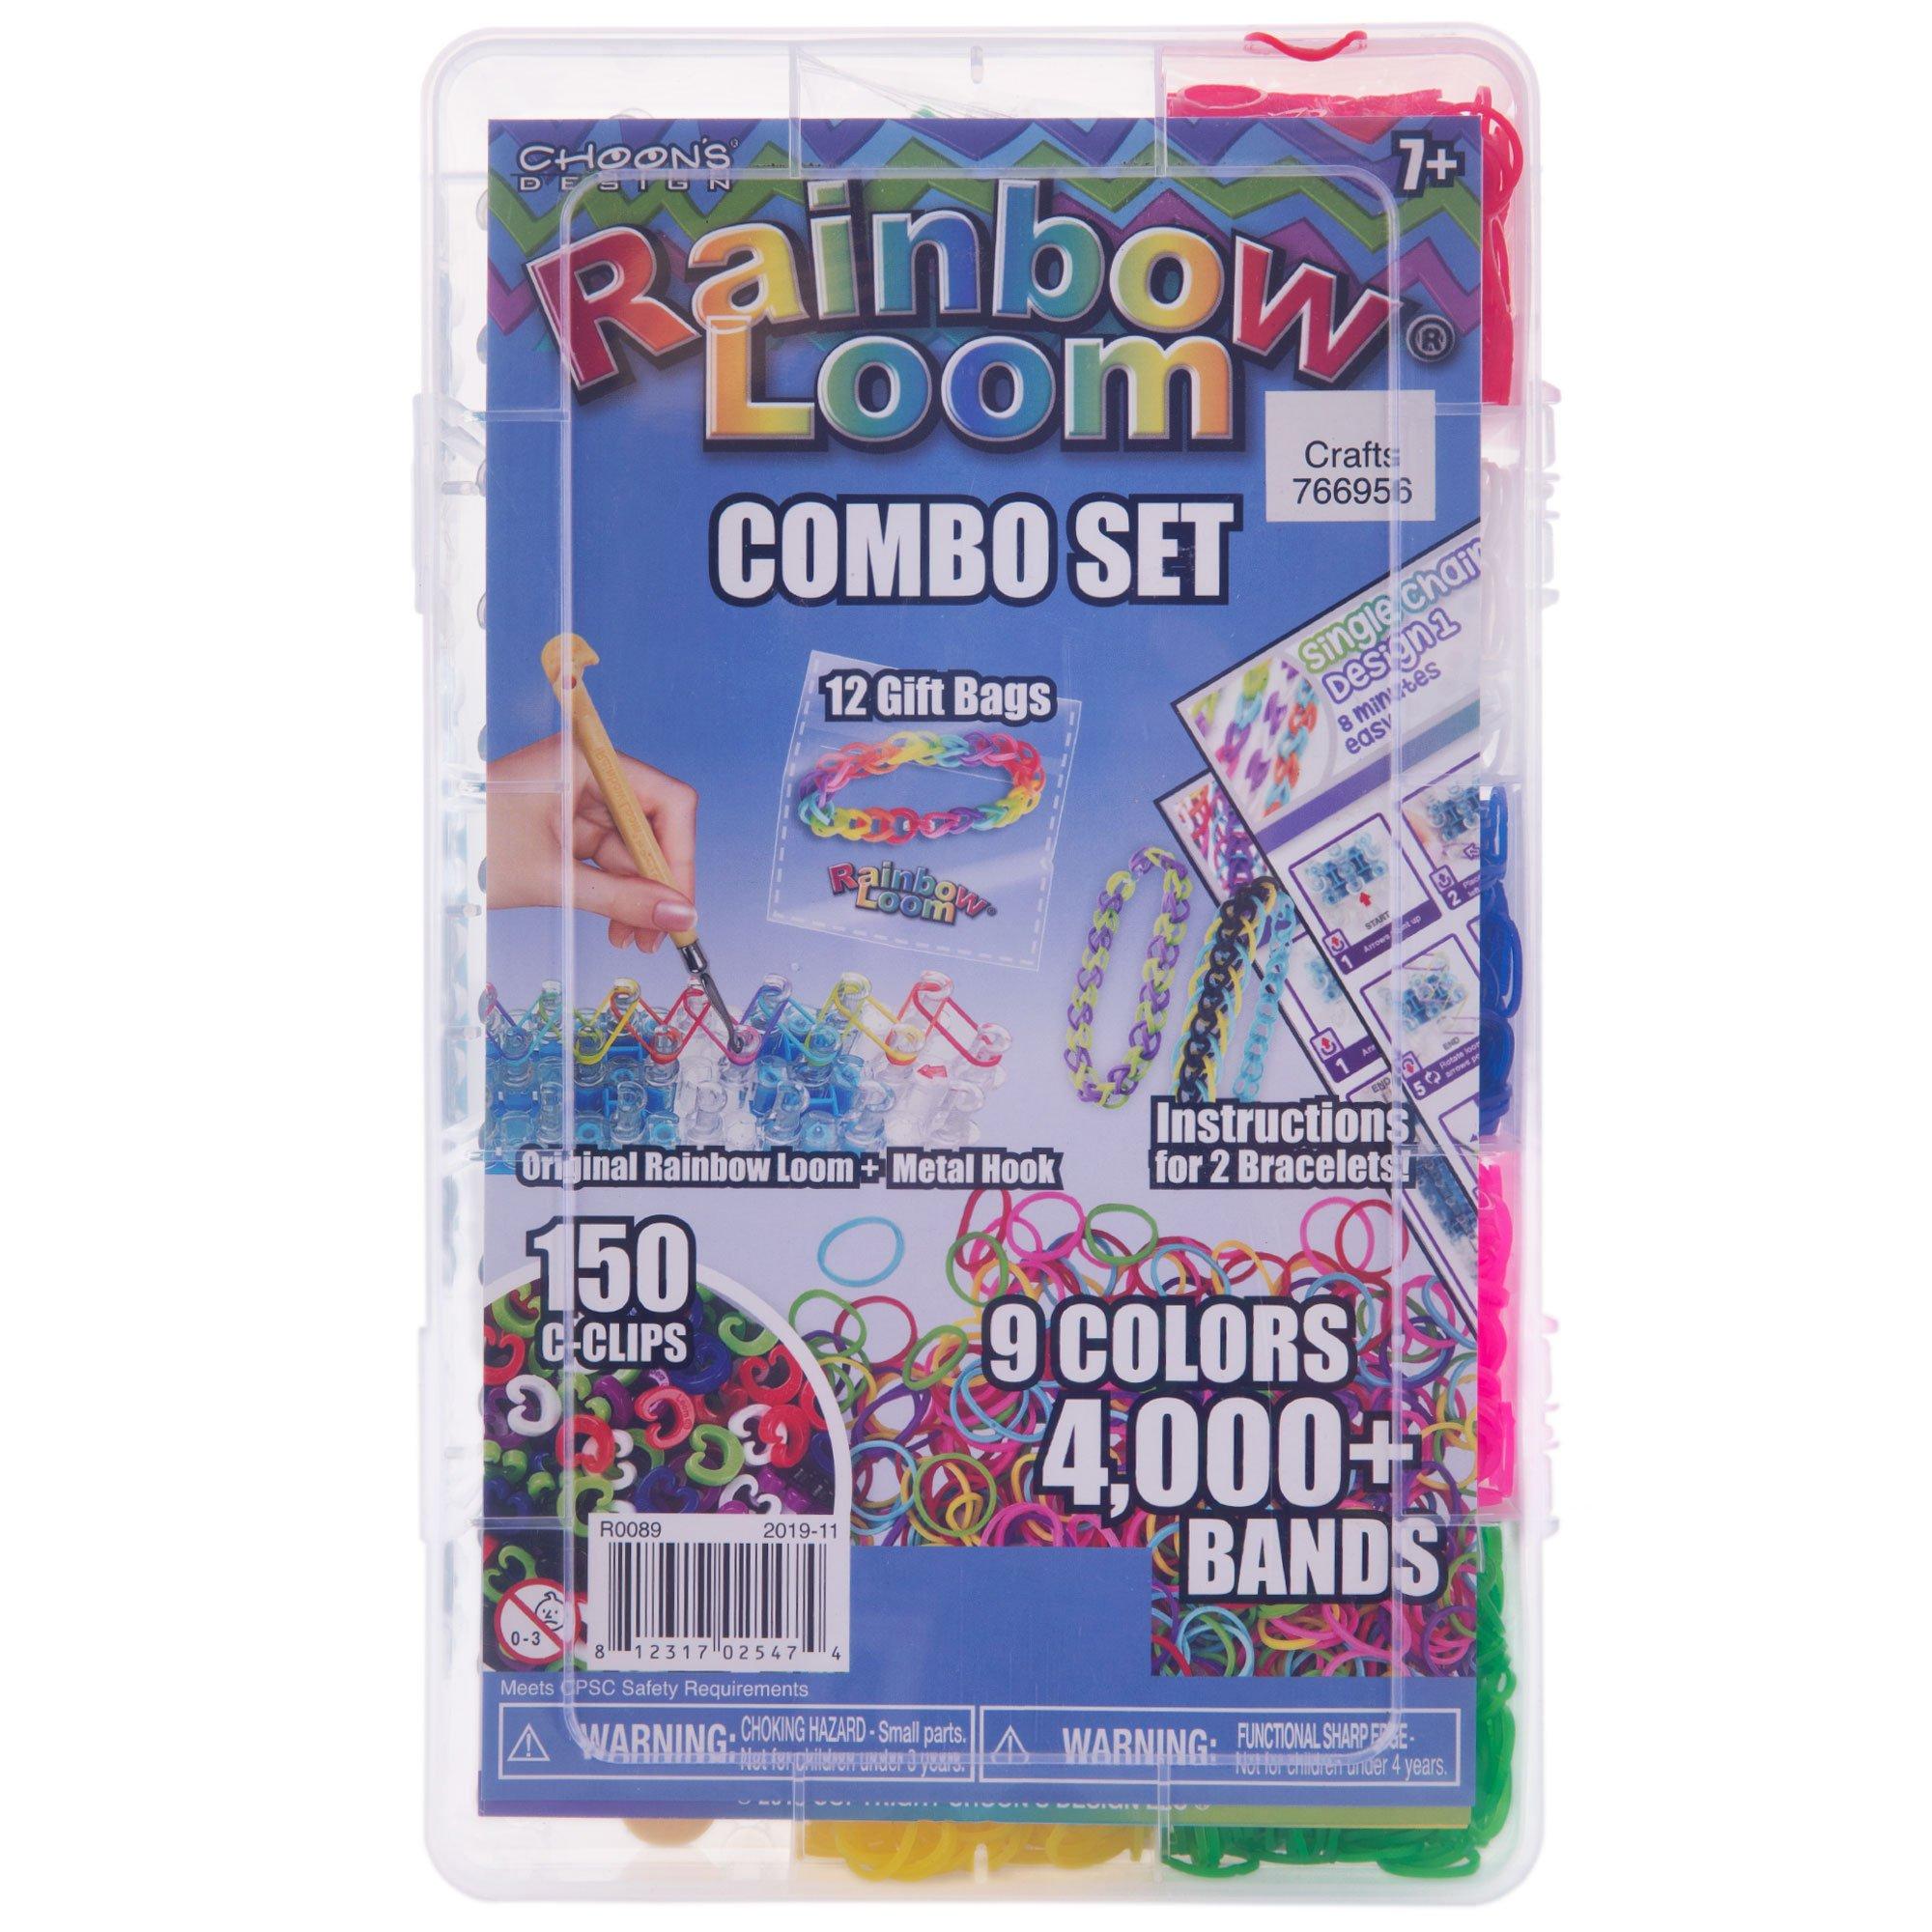 Coffret Rainbow Loom Original RAINBOW LOOM : le coffret à Prix Carrefour